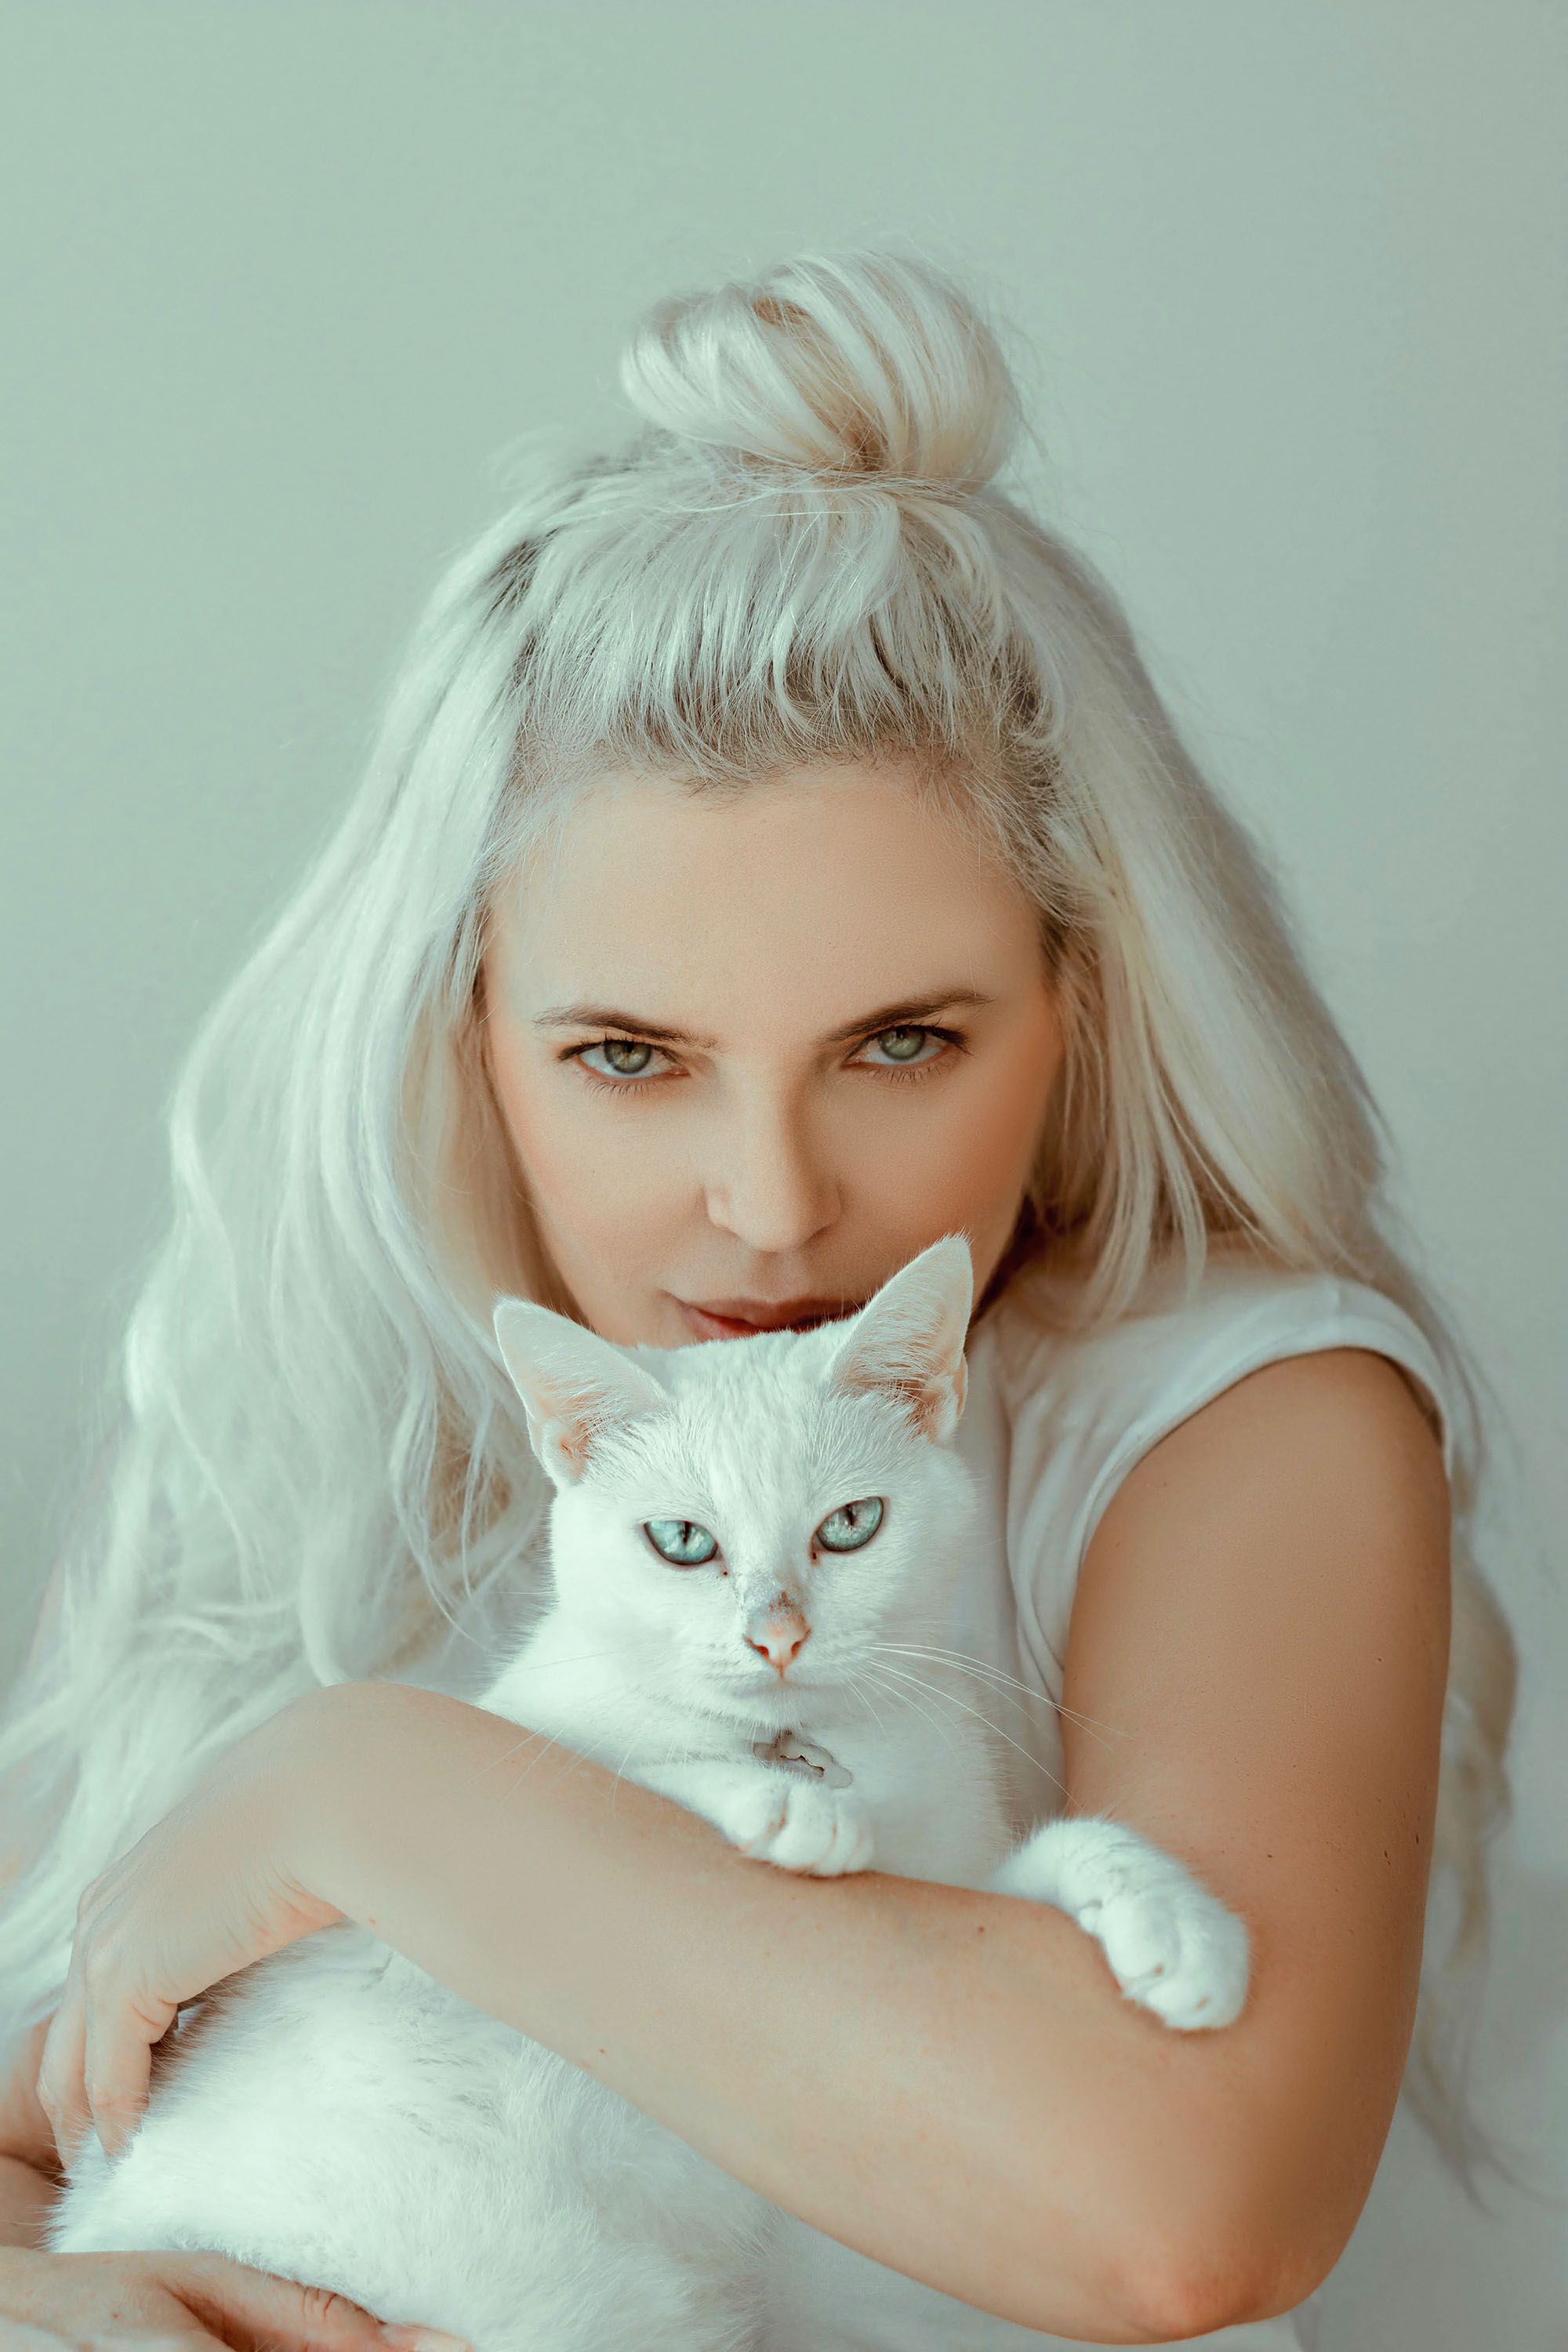 People 2000x3000 cats women T-shirt white tops blonde women with cat feline mammals animals simple background studio portrait